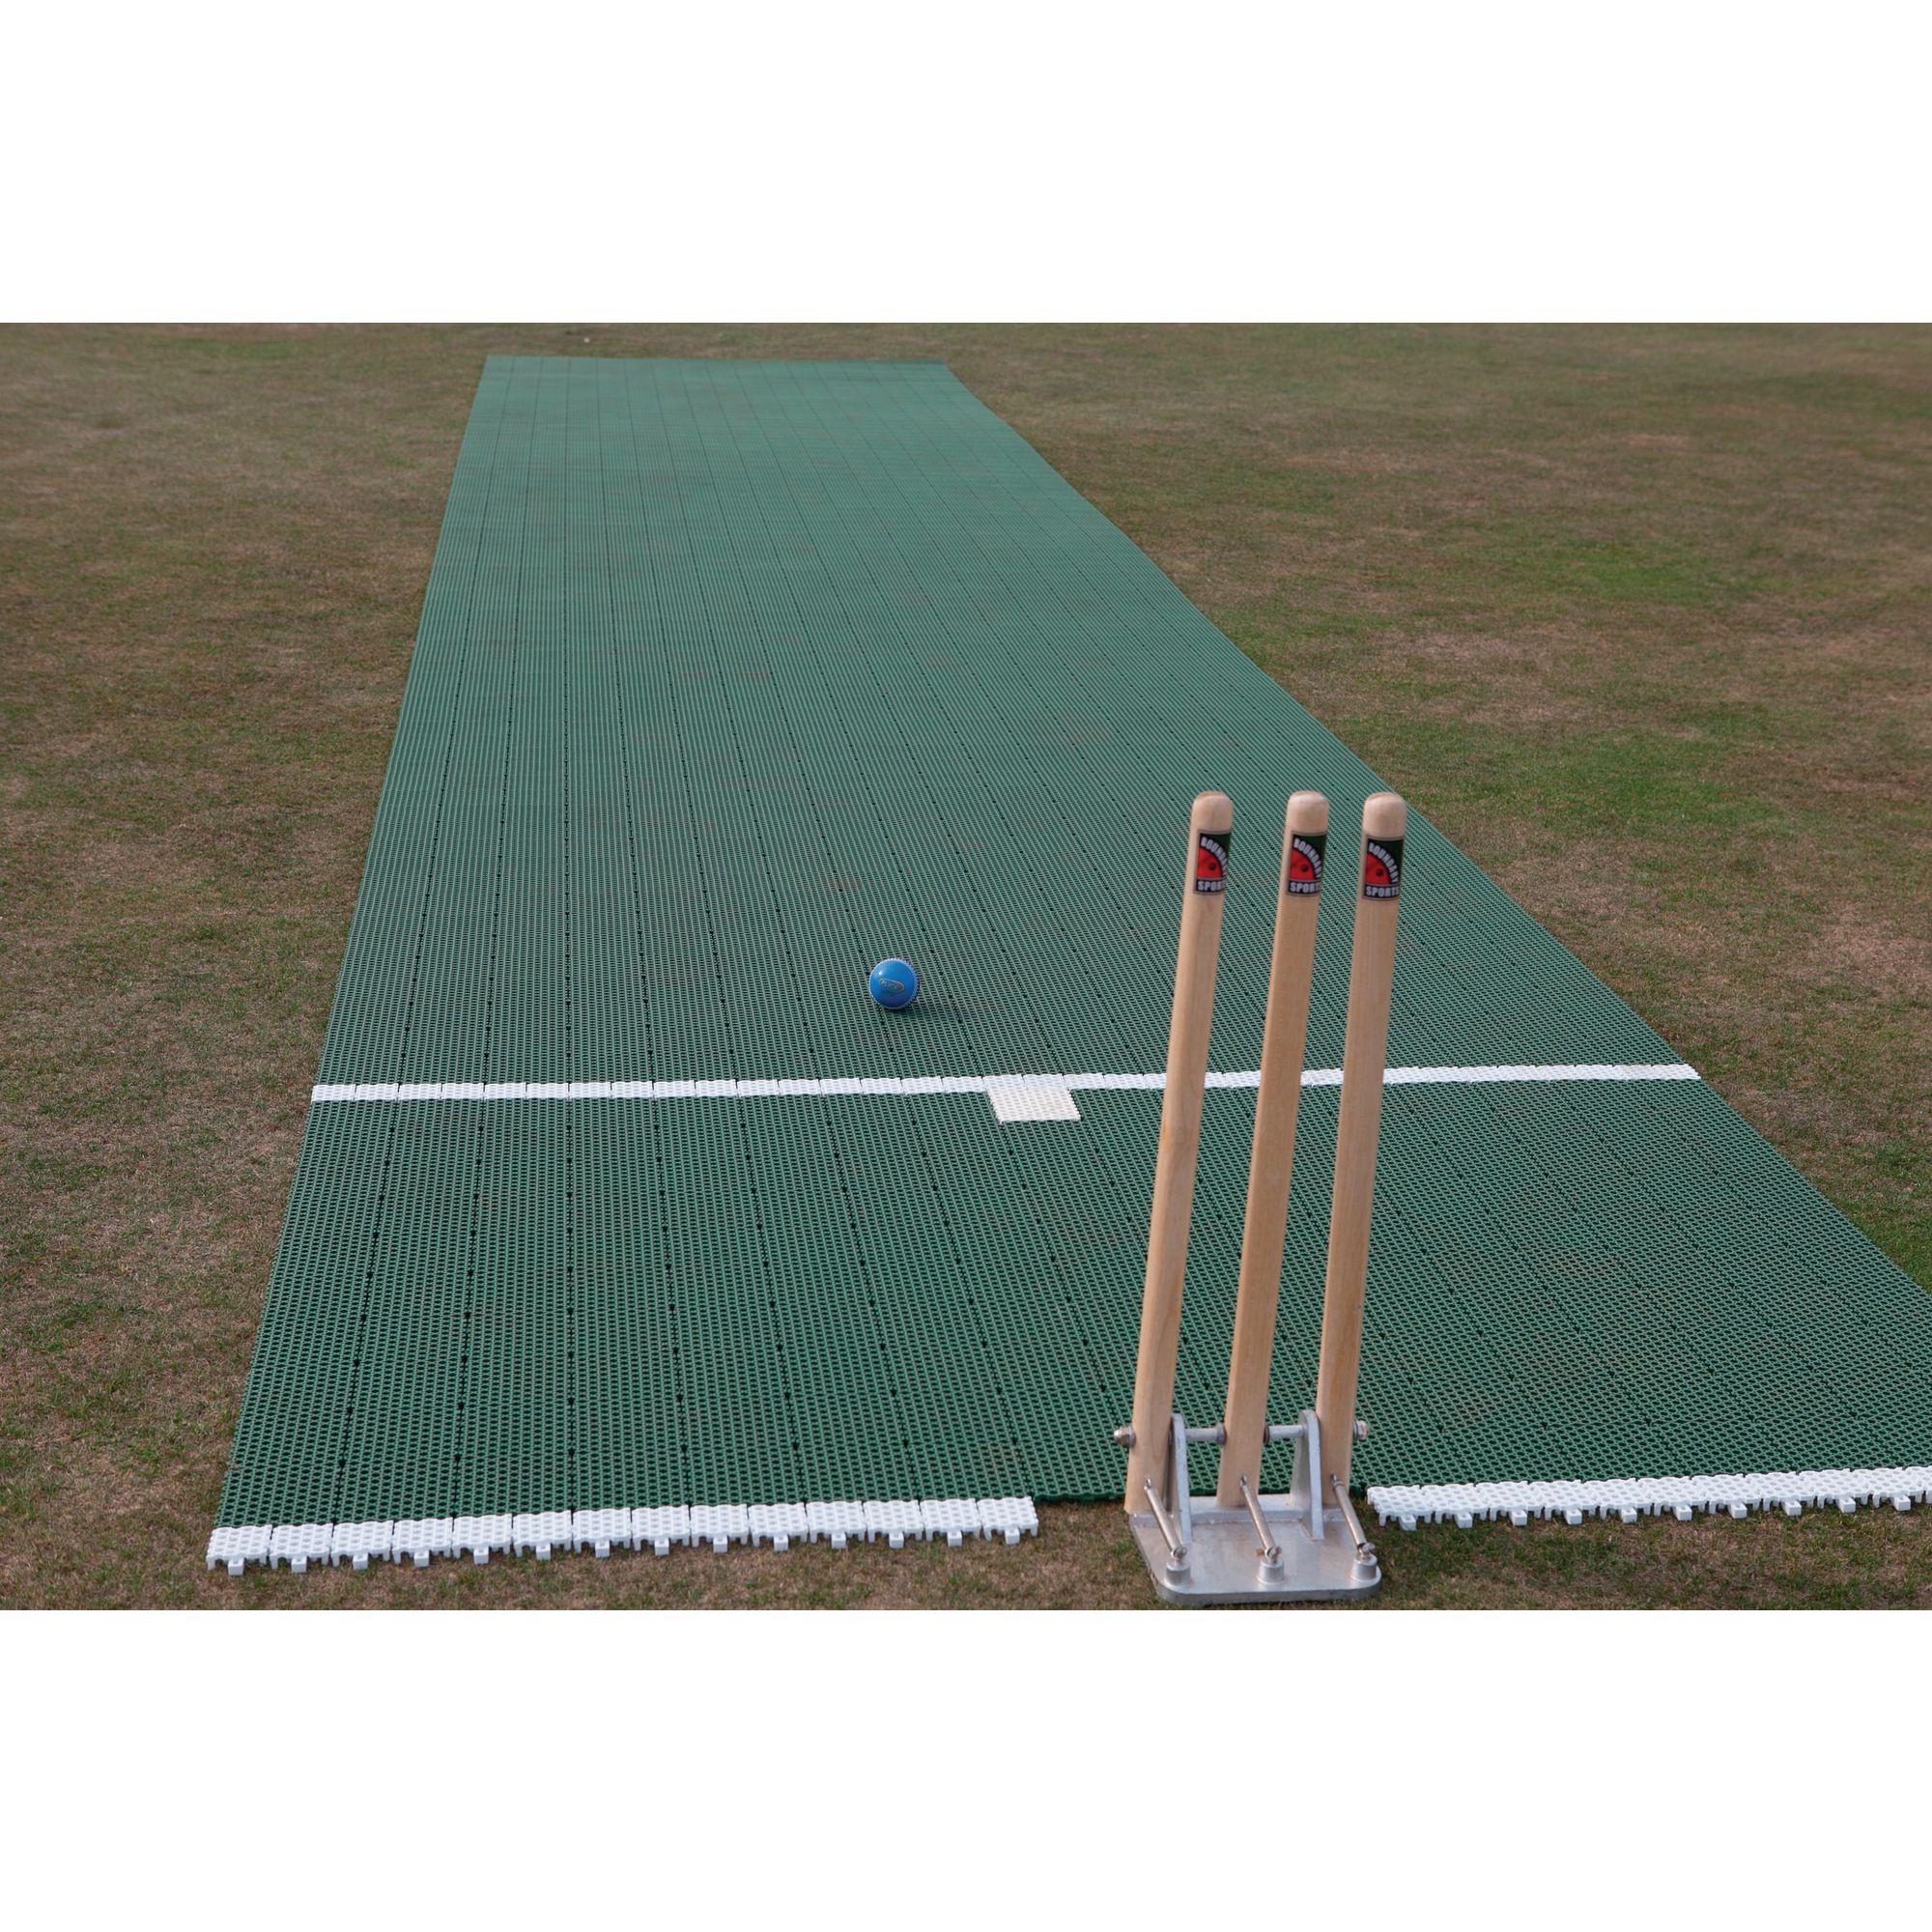 Flicx Cricket Match Pitch 10x2m